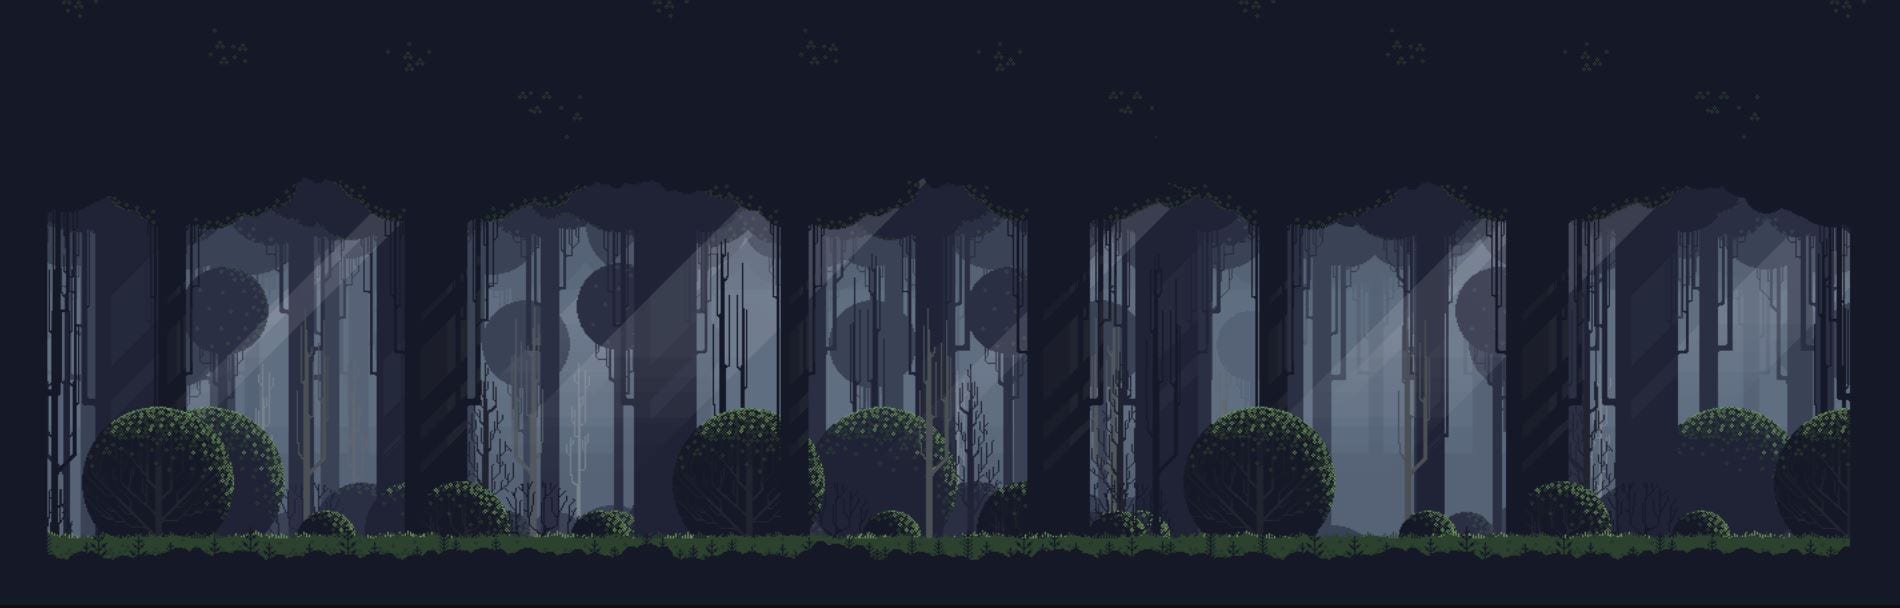 free pixel art forest